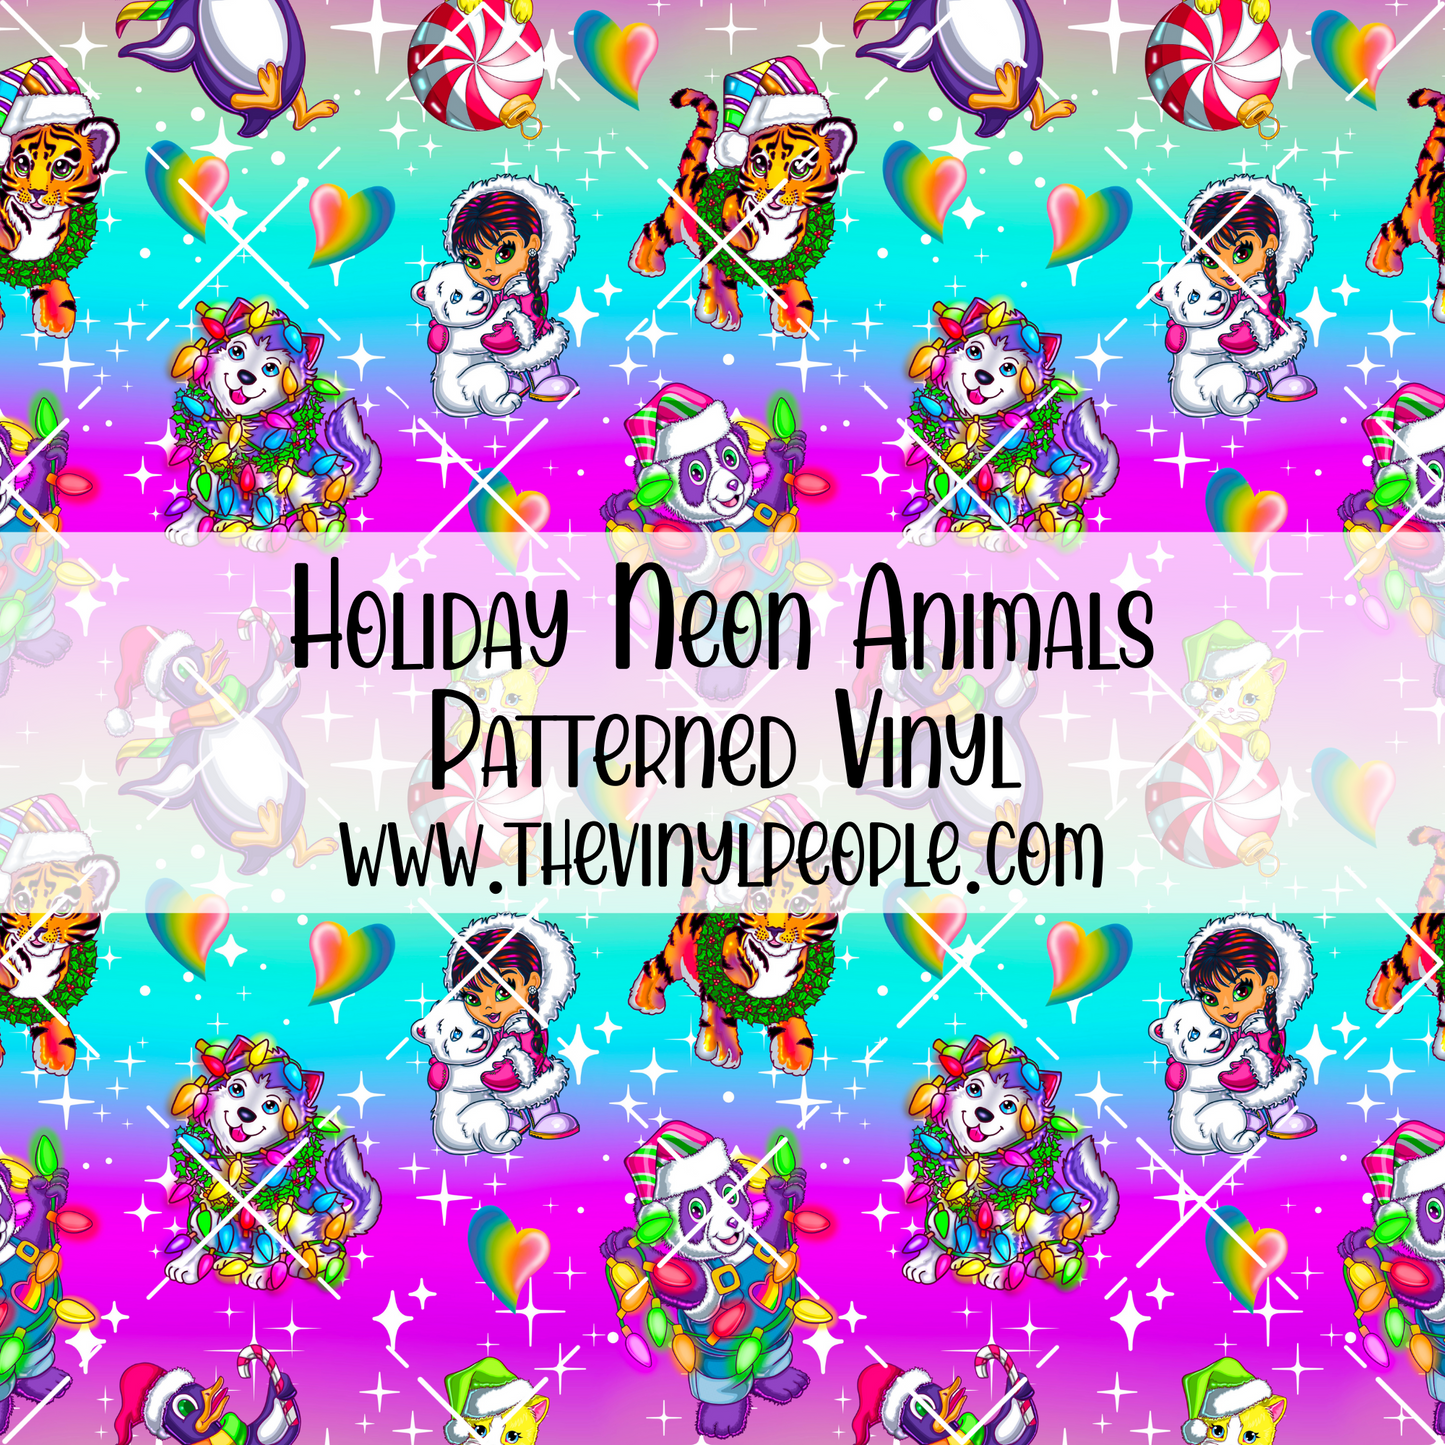 Holiday Neon Animals Patterned Vinyl